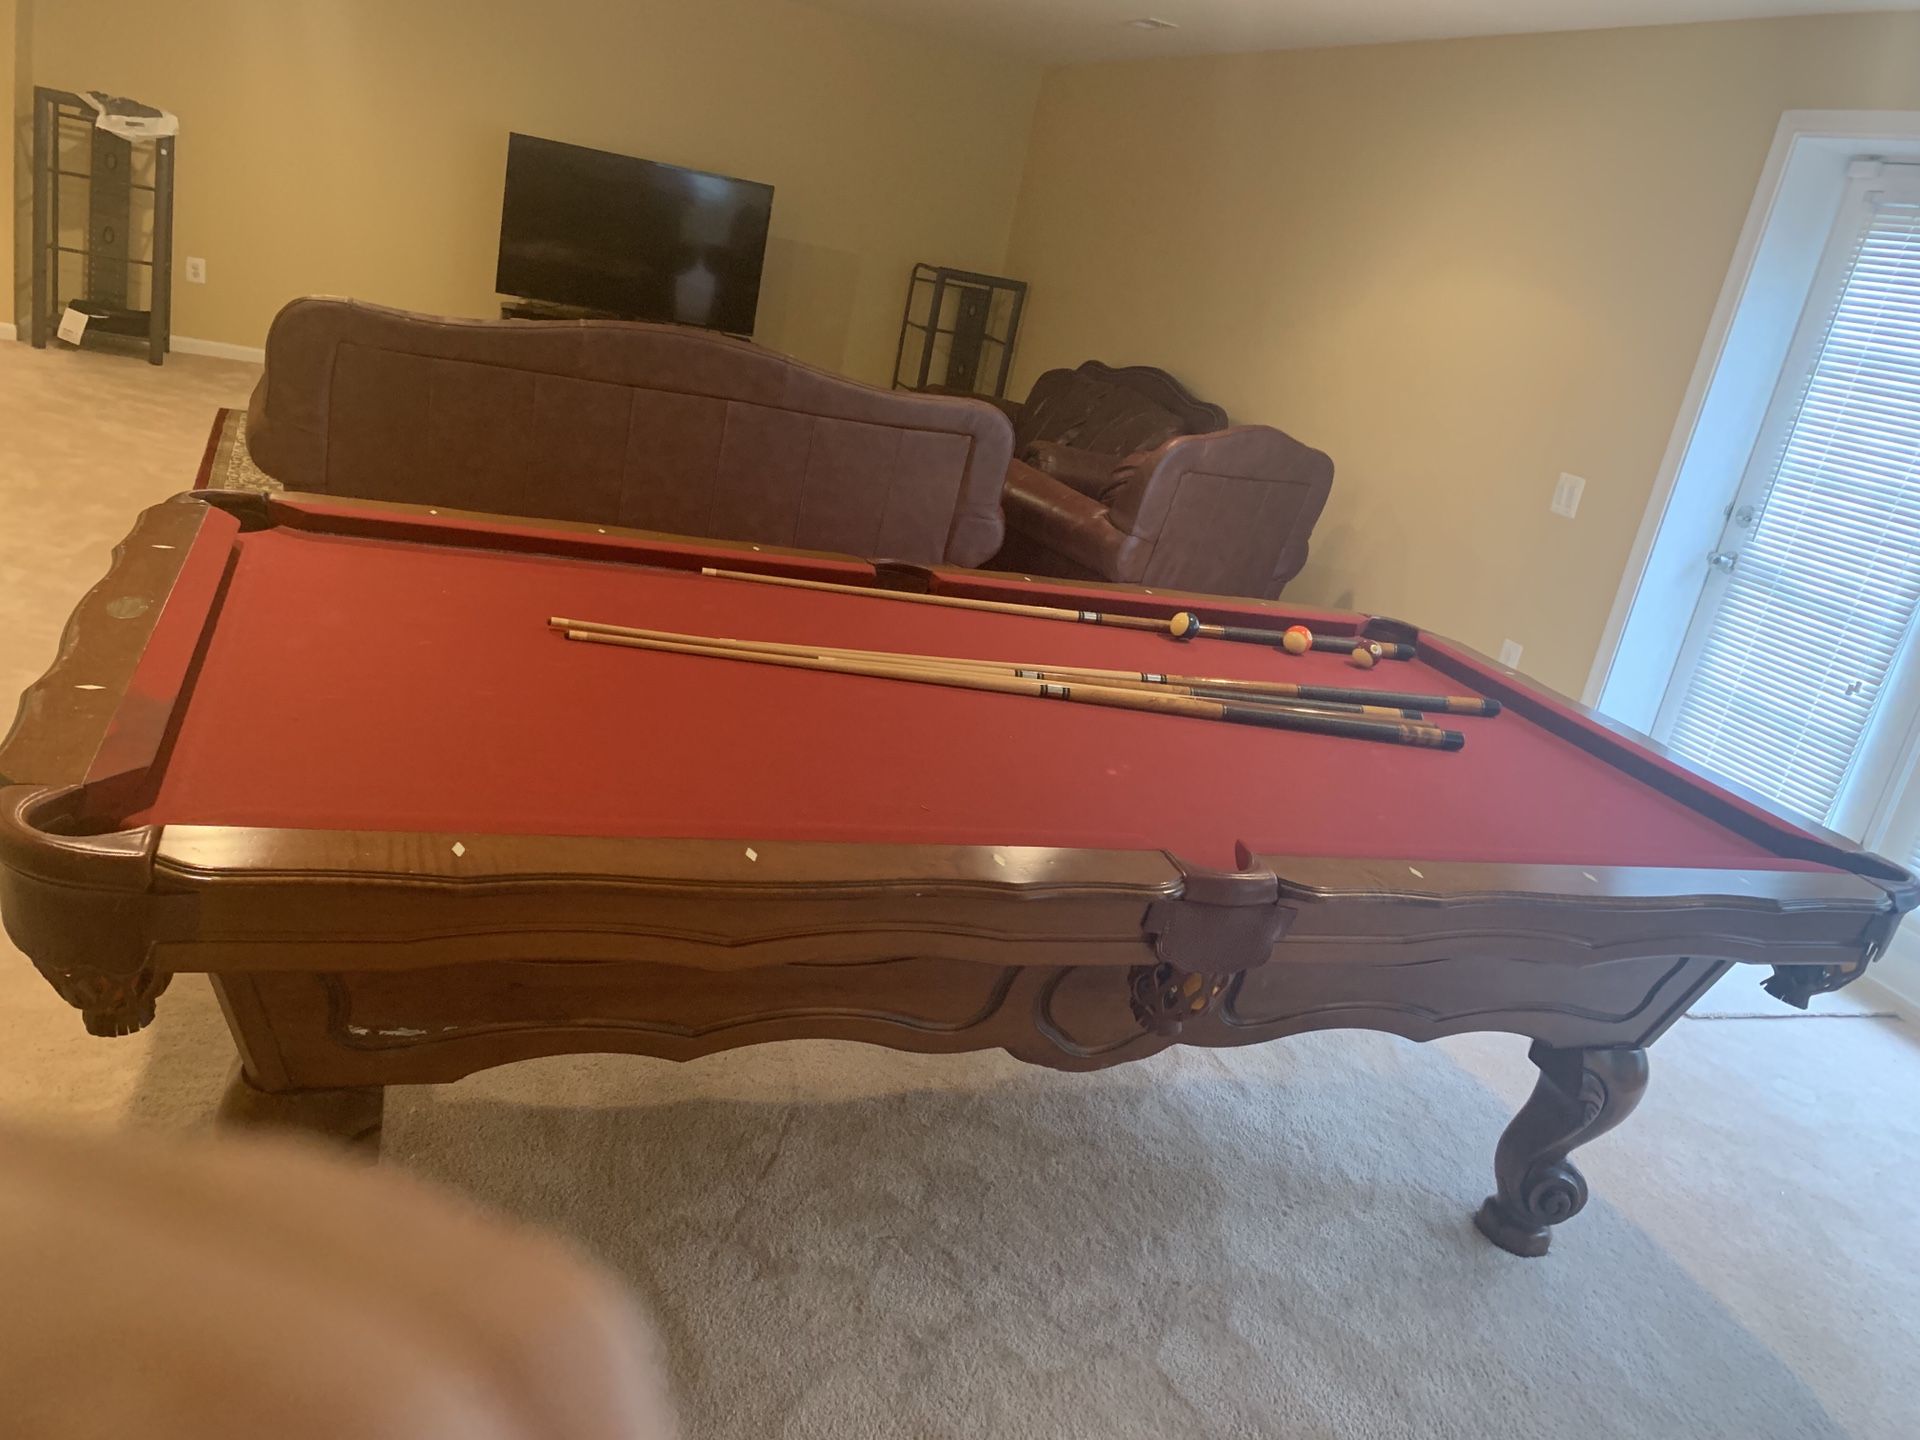 OlHausen Santa Ana Solid Wood Pool Table $1,800 obo